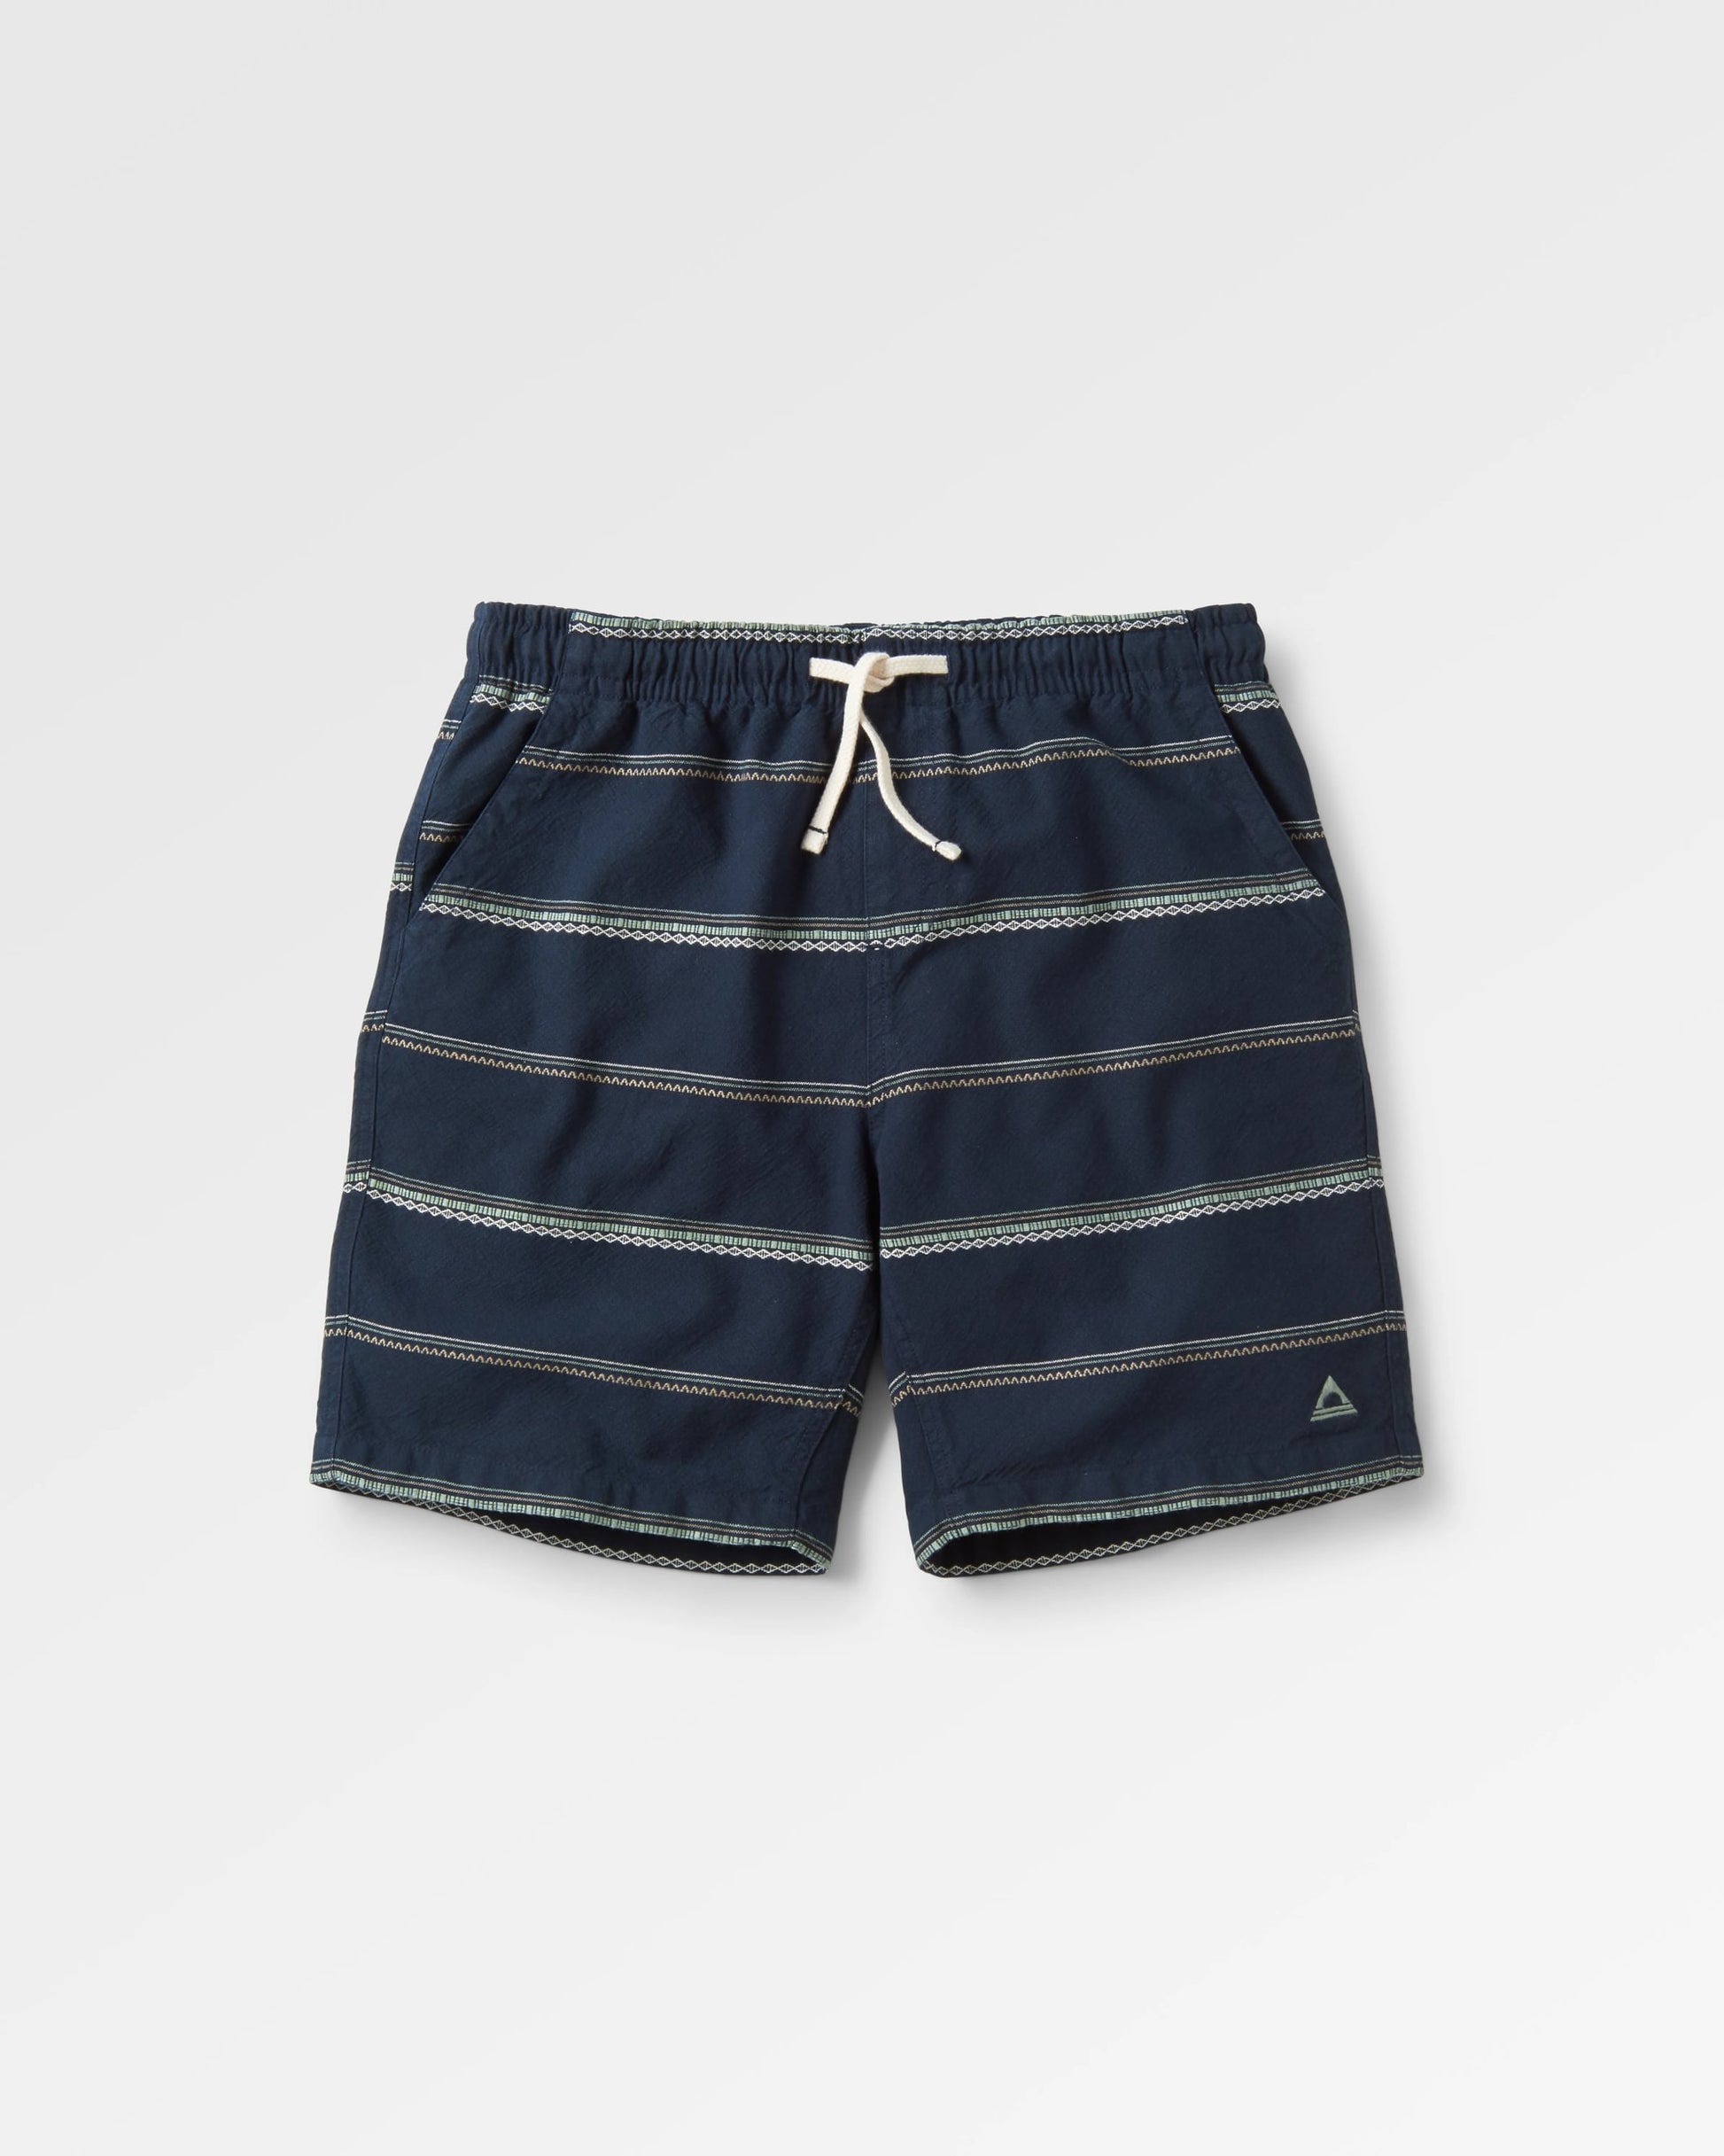 Drifter Organic Cotton Jacquard Shorts - Deep Navy Jacquard Stripe